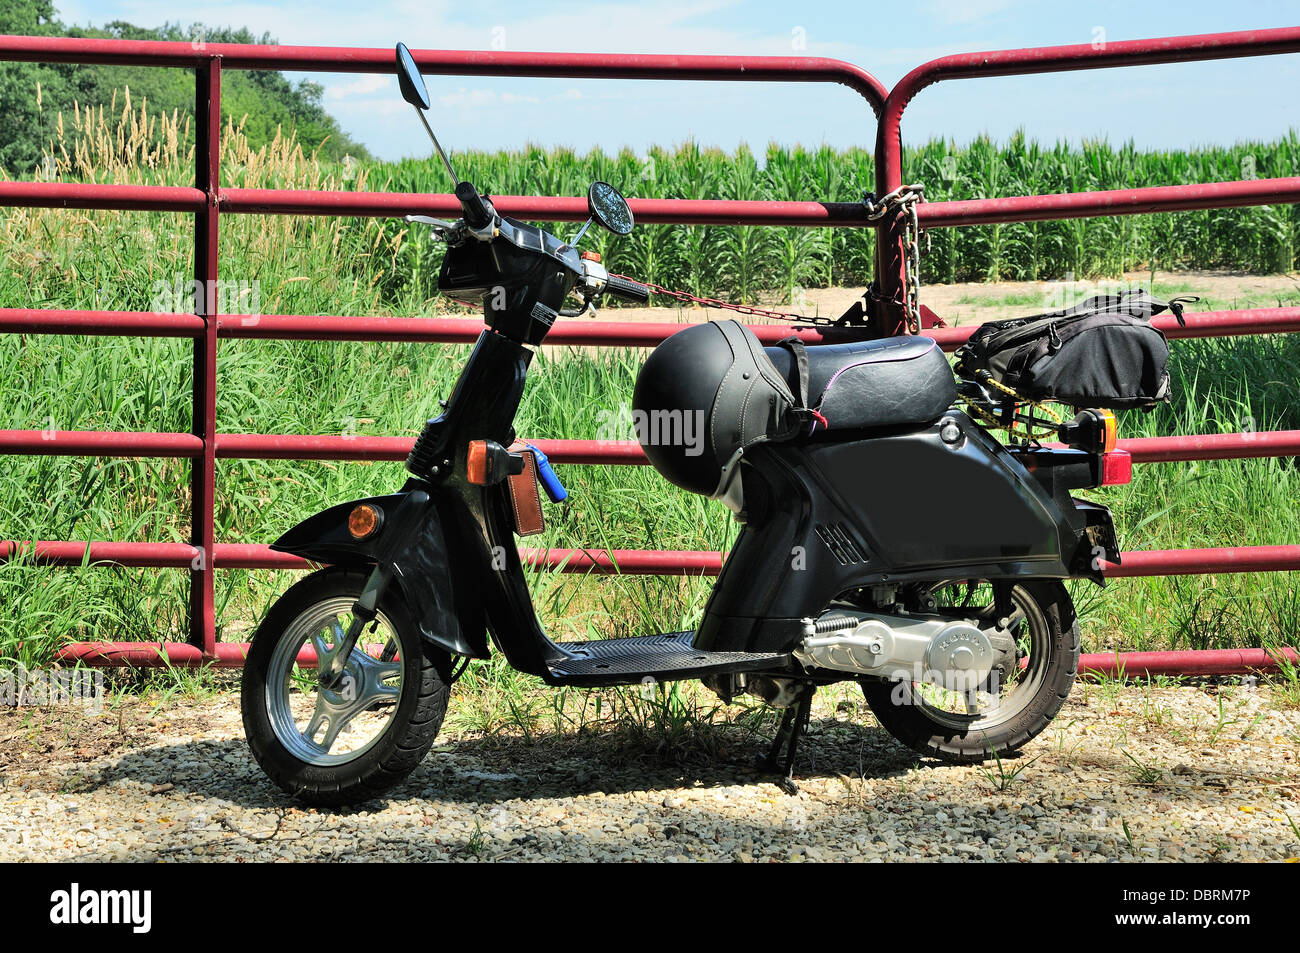 Restored Honda Spree scooter parked by fence near cornfield. Stock Photo